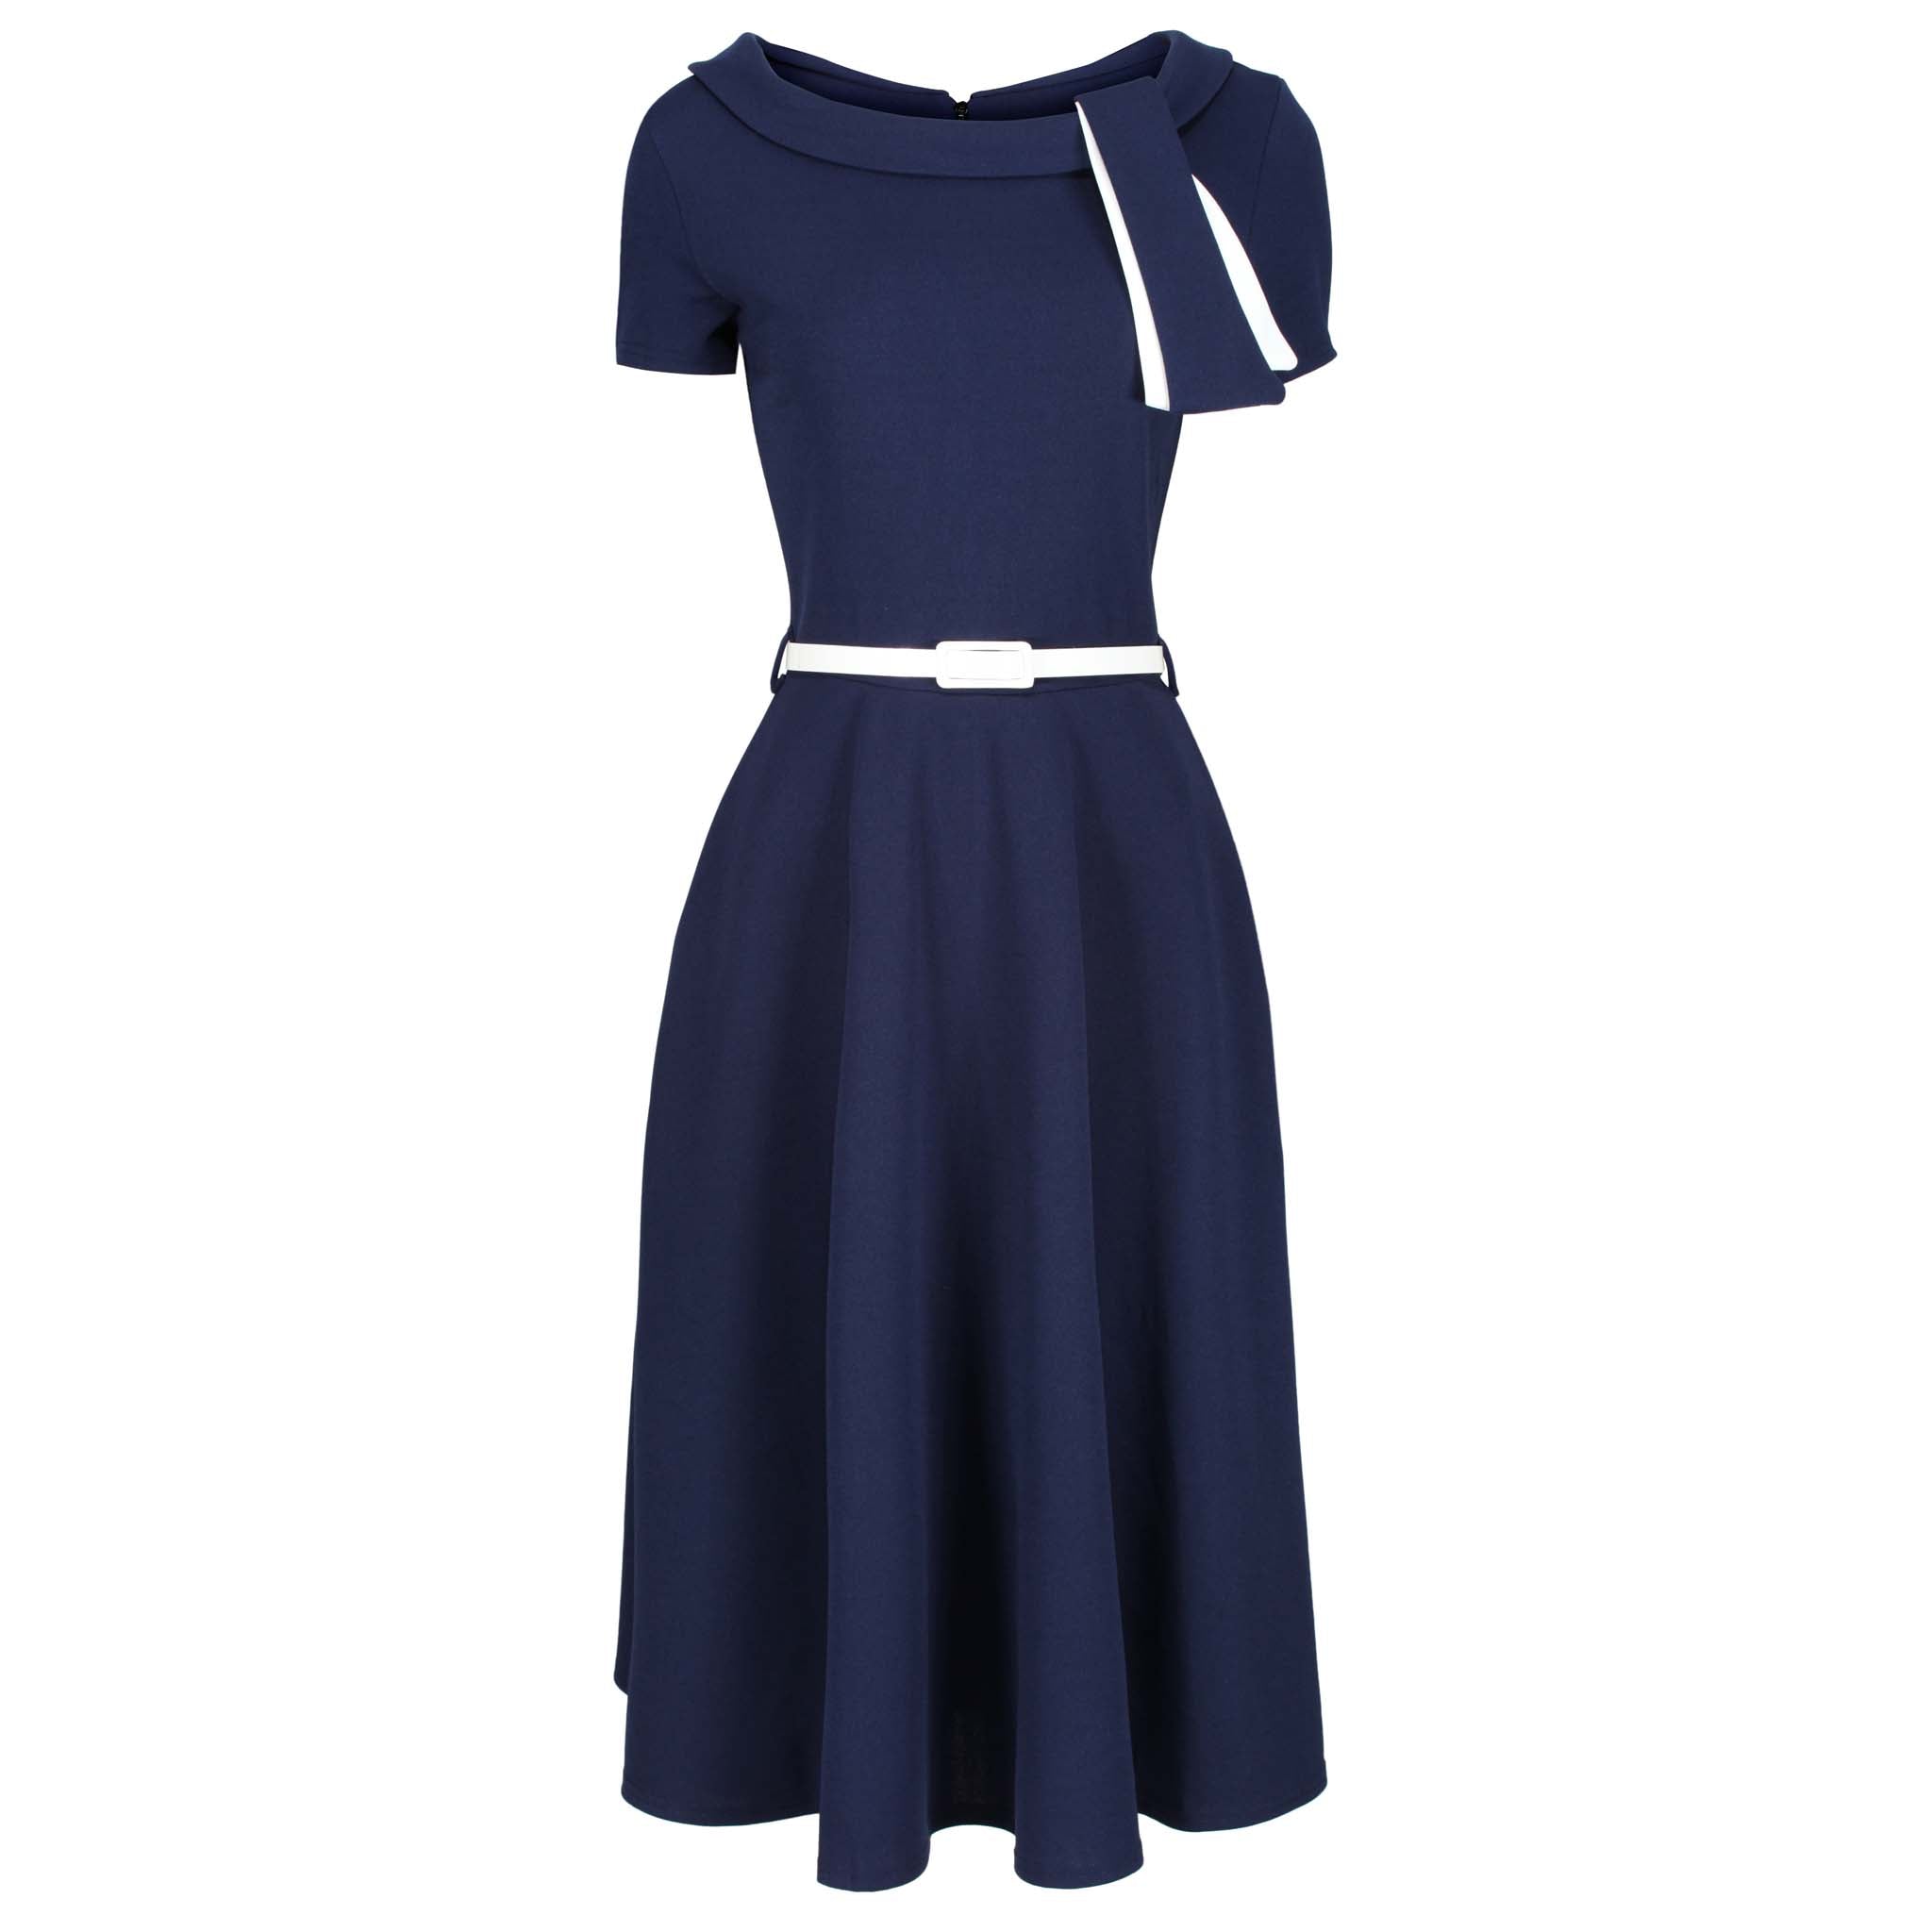 Navy Blue White Tie Short Sleeve Vintage Swing Dress